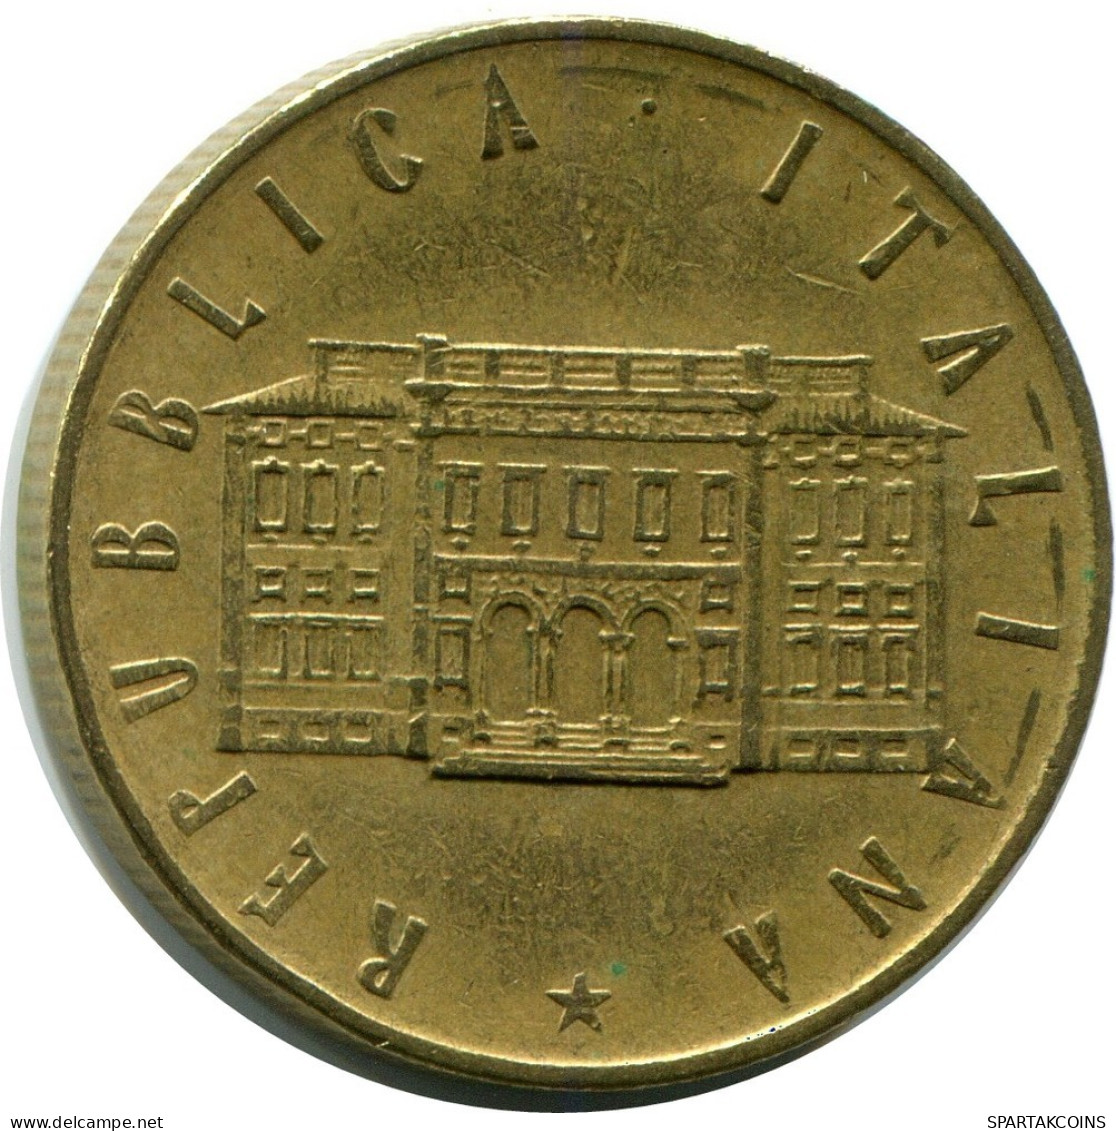 200 LIRE 1981 ITALY Coin #AZ543.U.A - 200 Liras